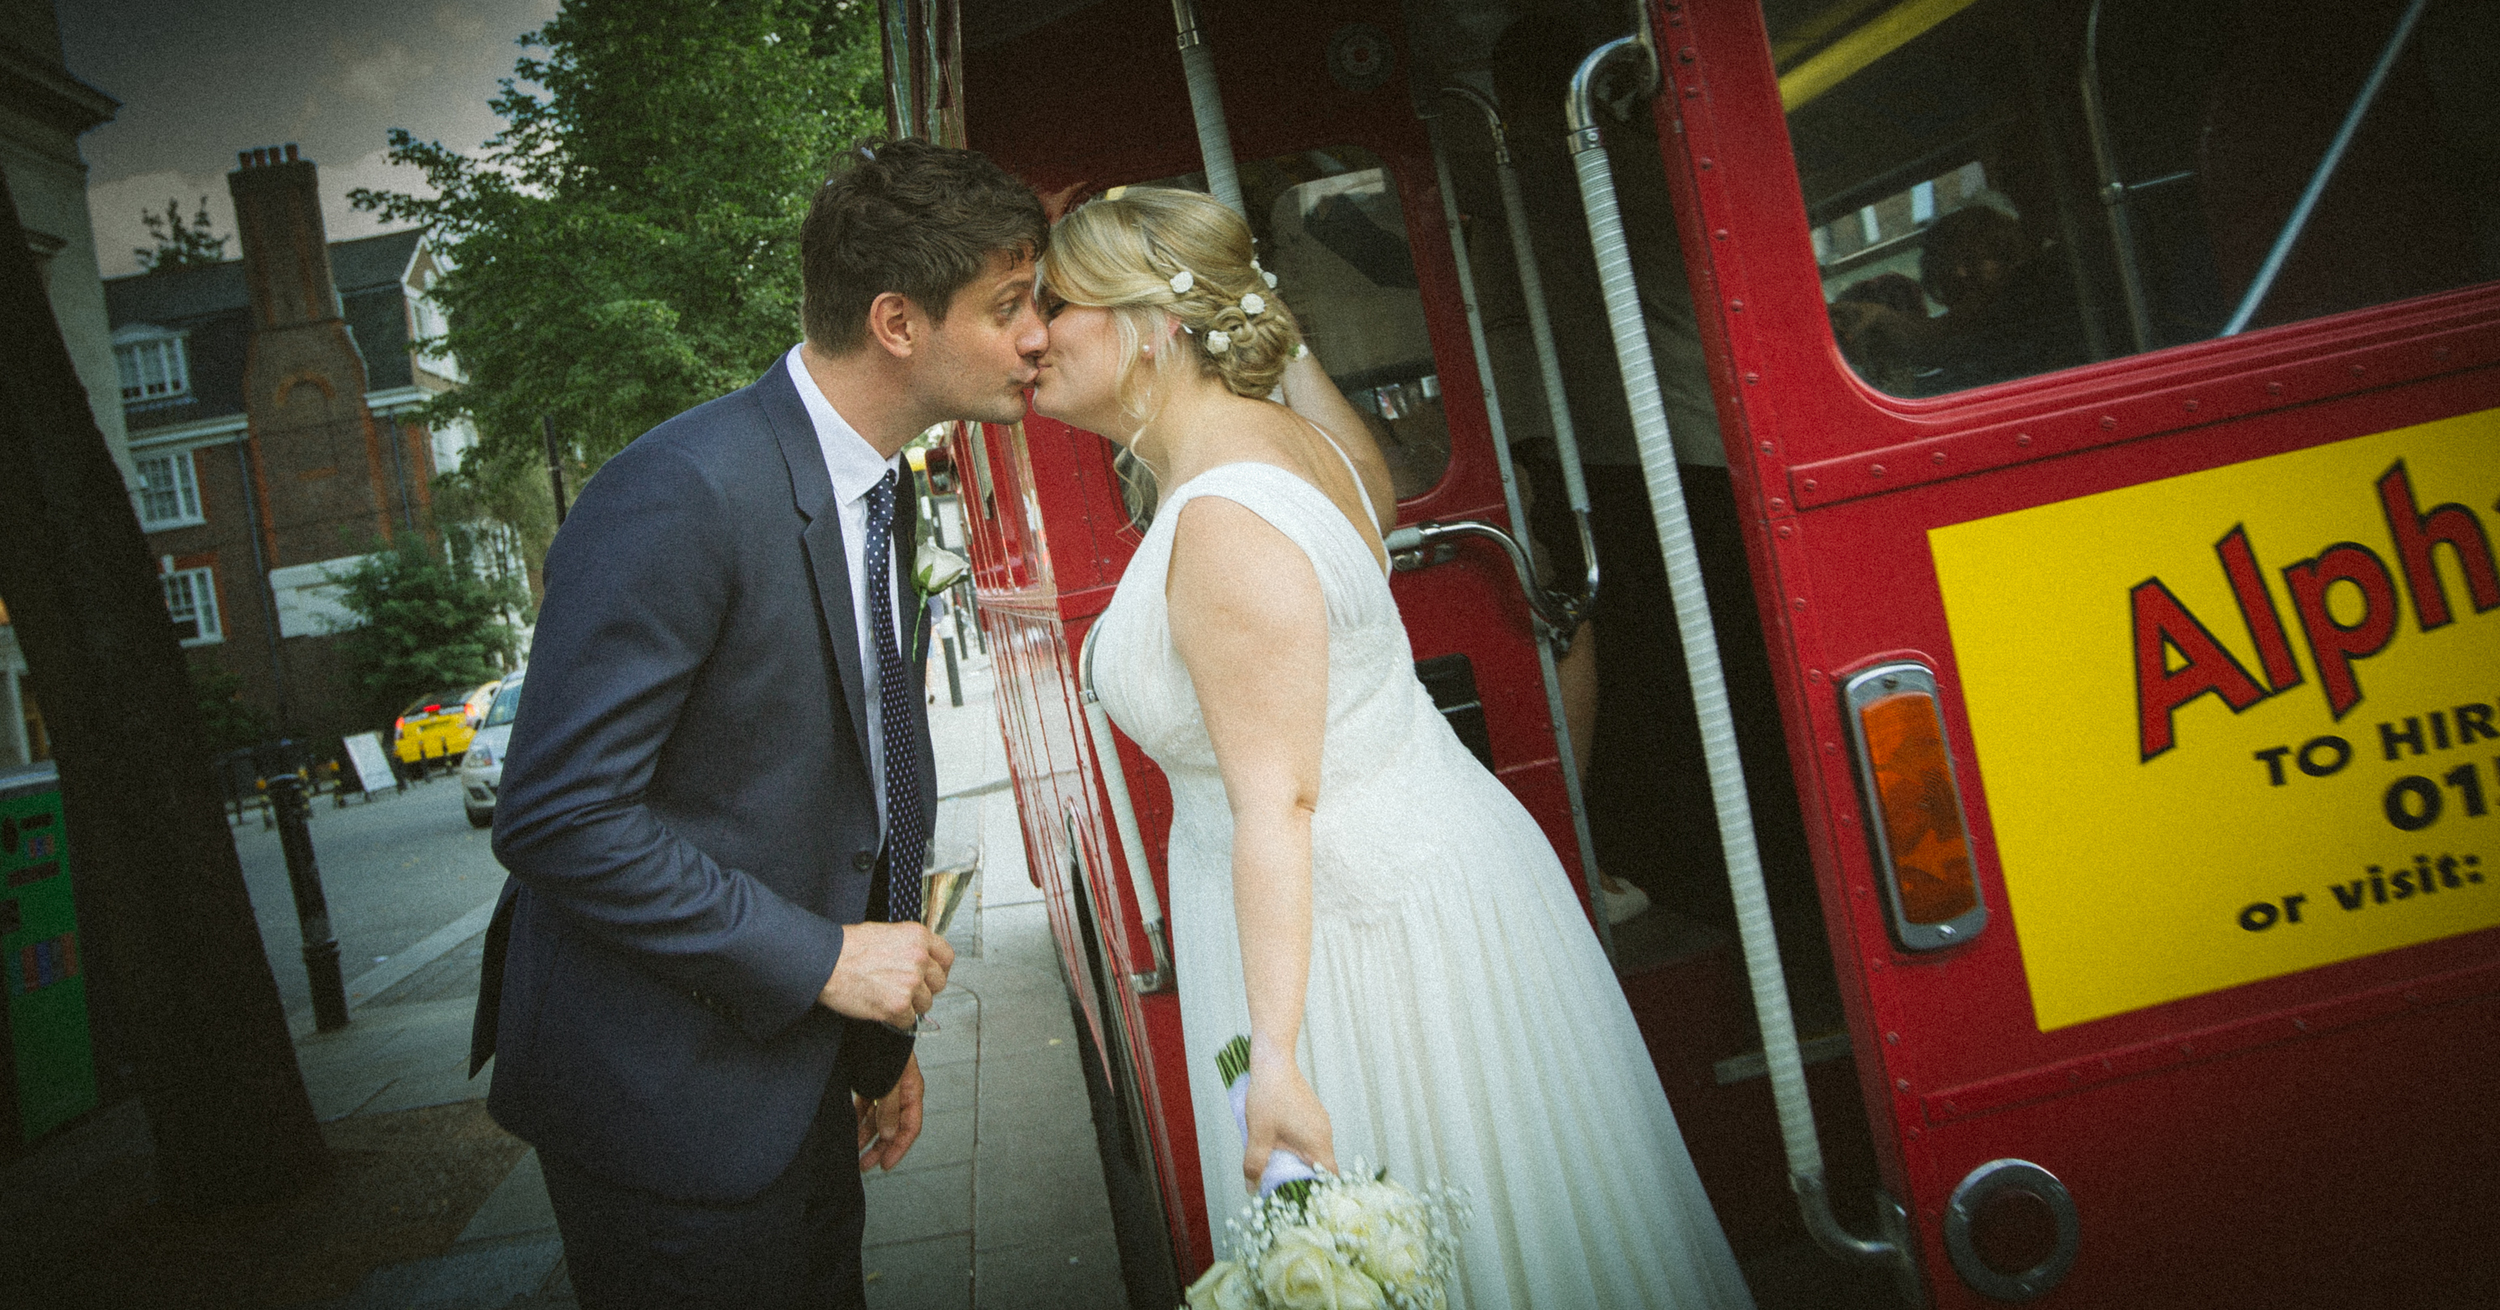 routemaster-bus-romantic-kiss-vintage-wedding-1